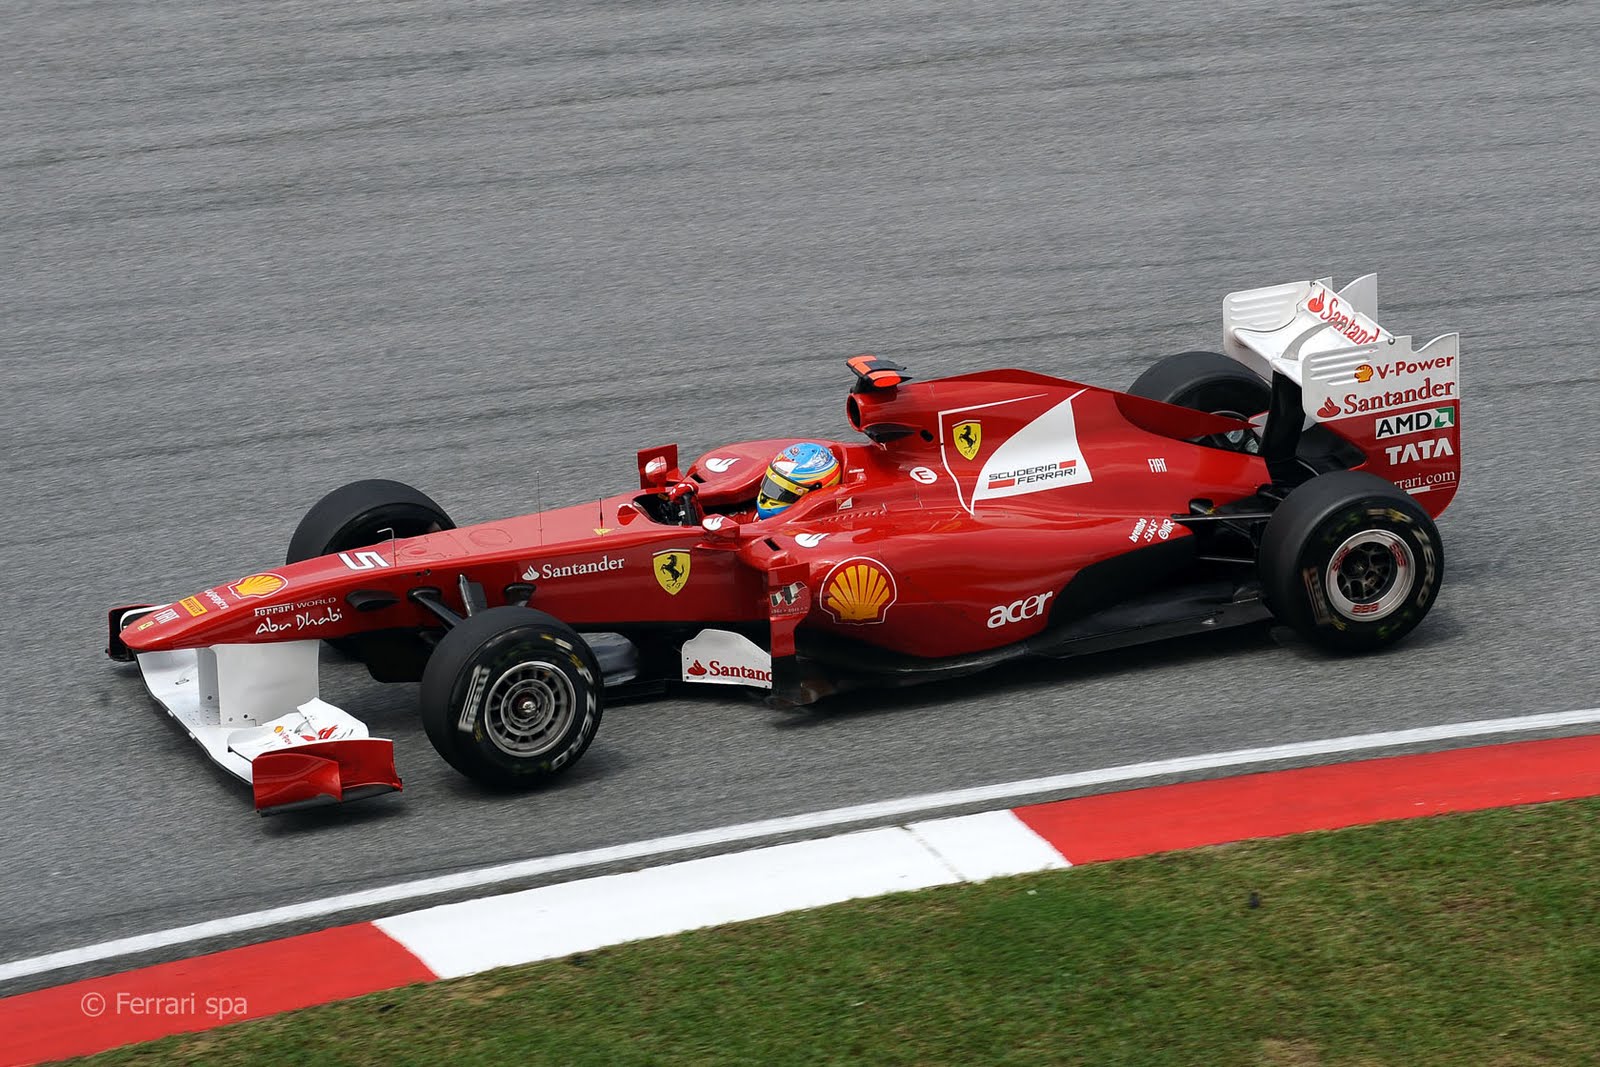 F1 FOLLOWER: Alonso:Ferrari are not fast enough to win!!